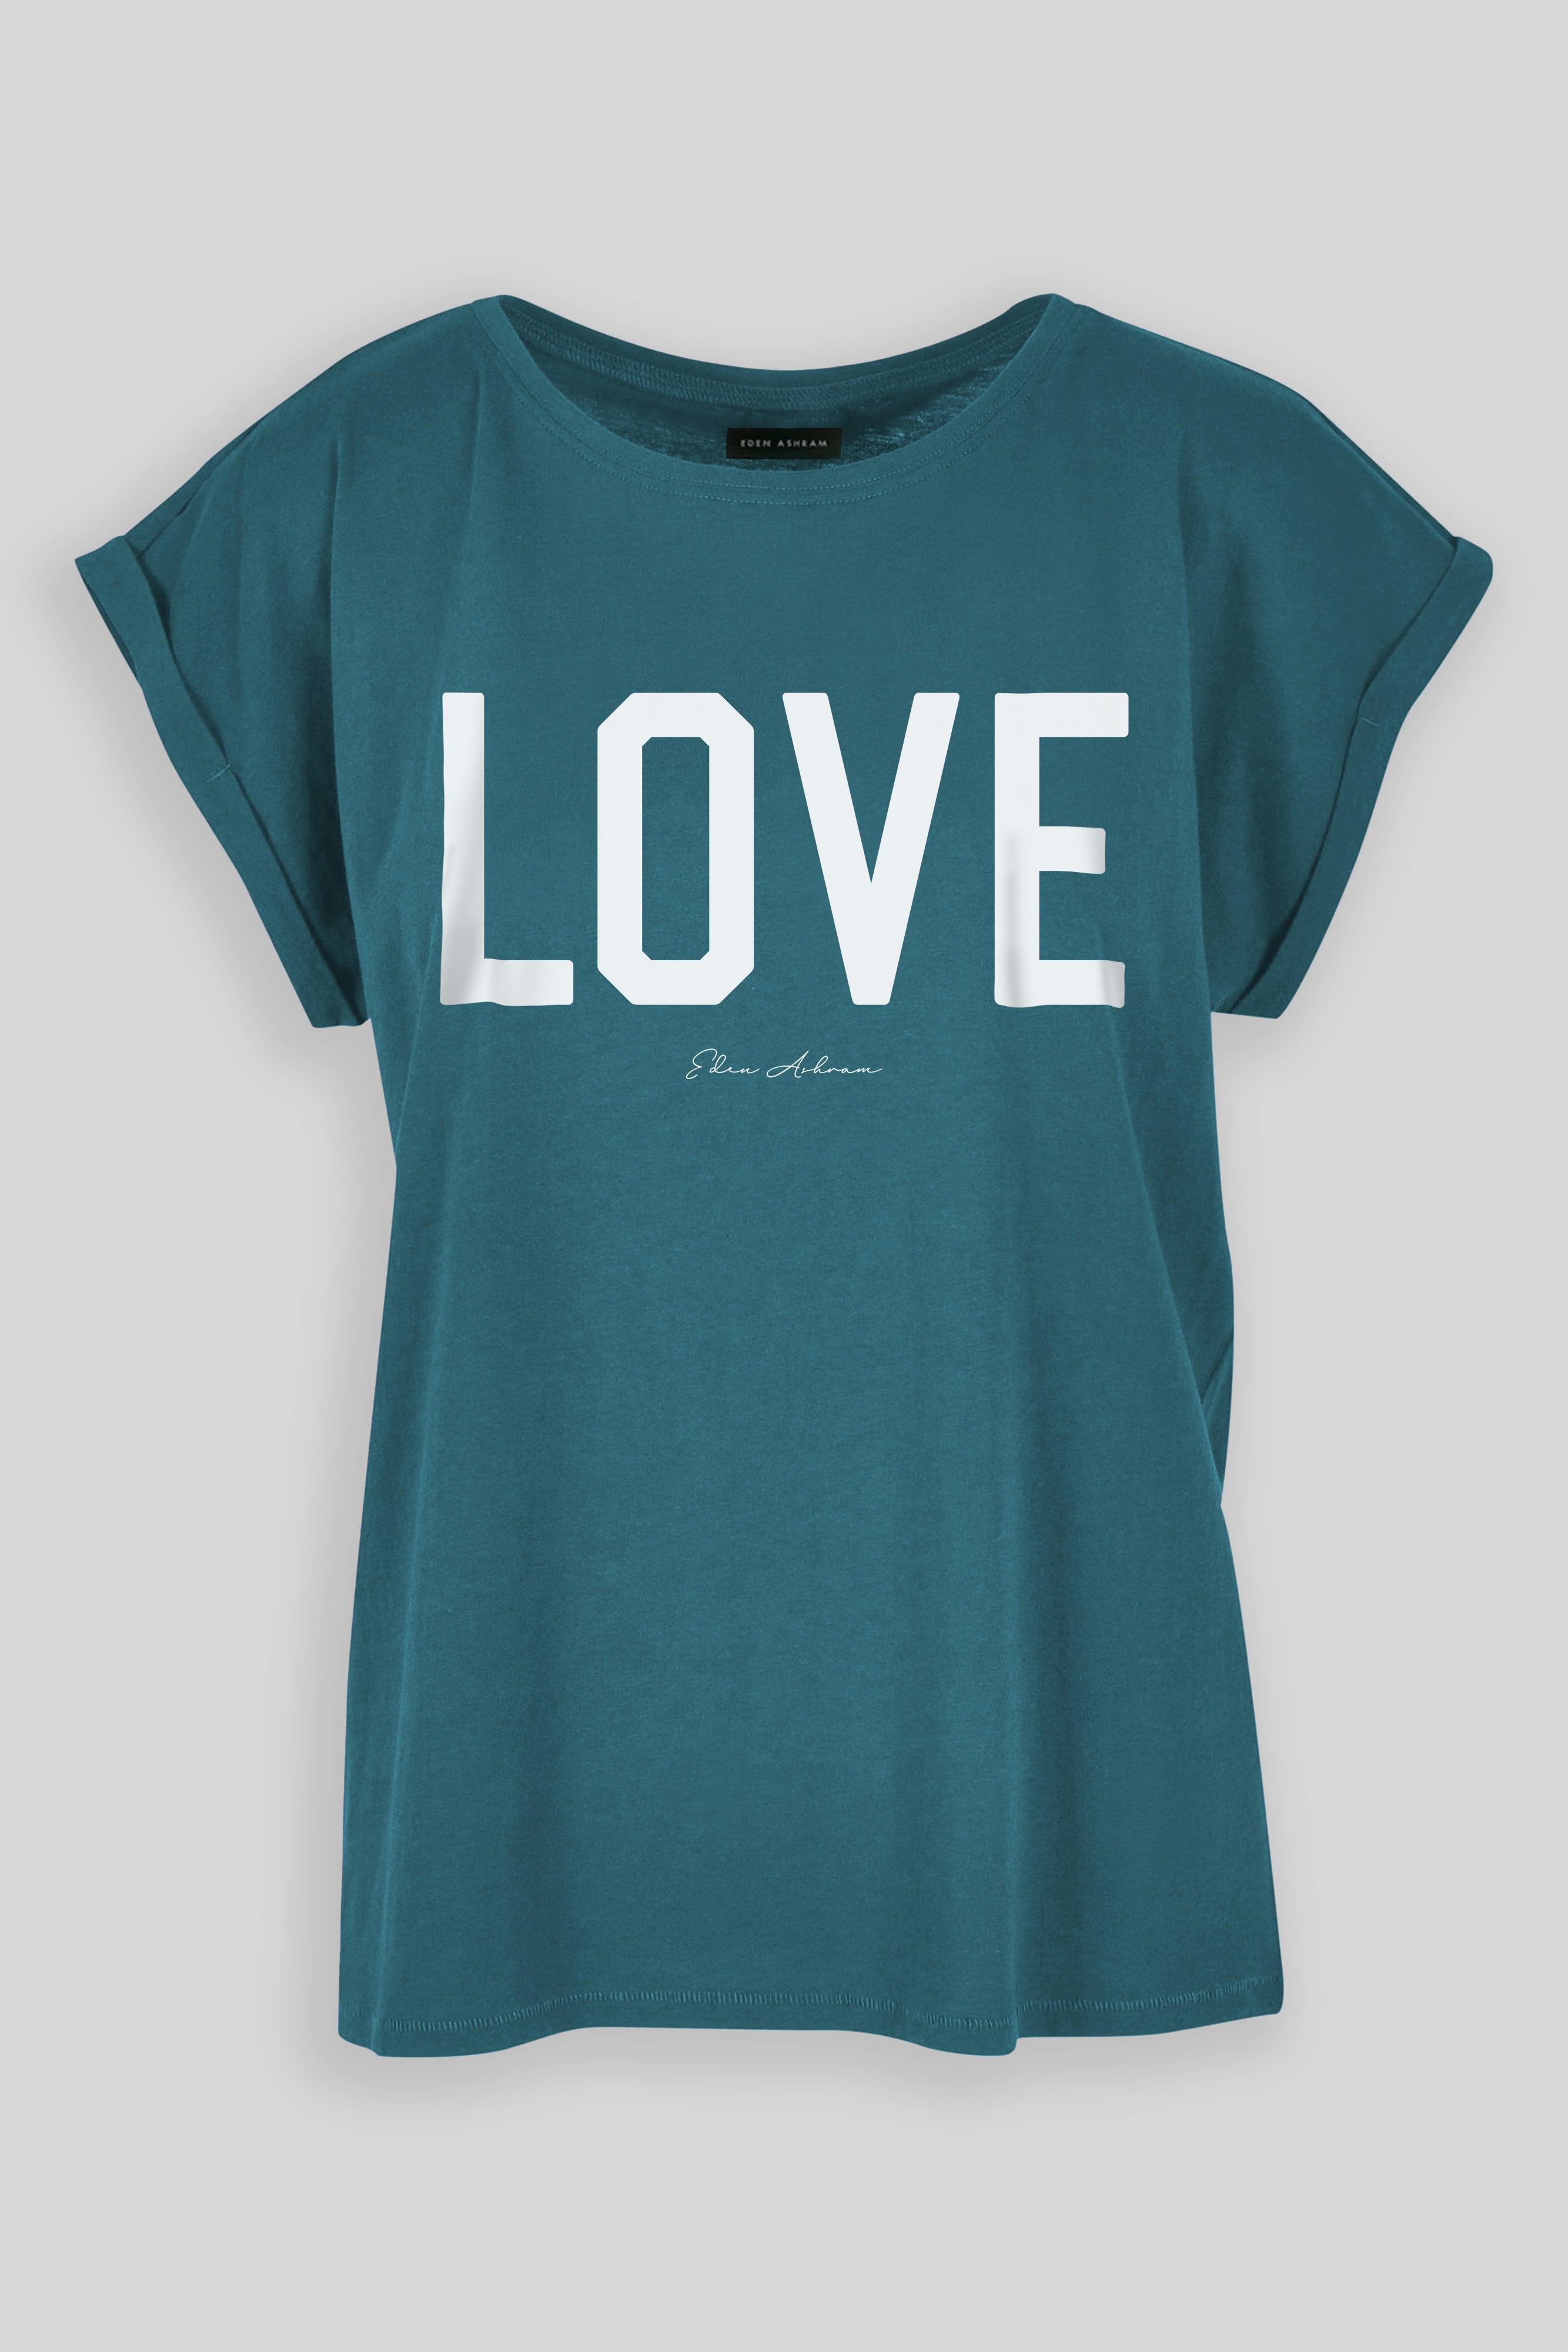 EDEN ASHRAM LOVE Cali T-Shirt Teal